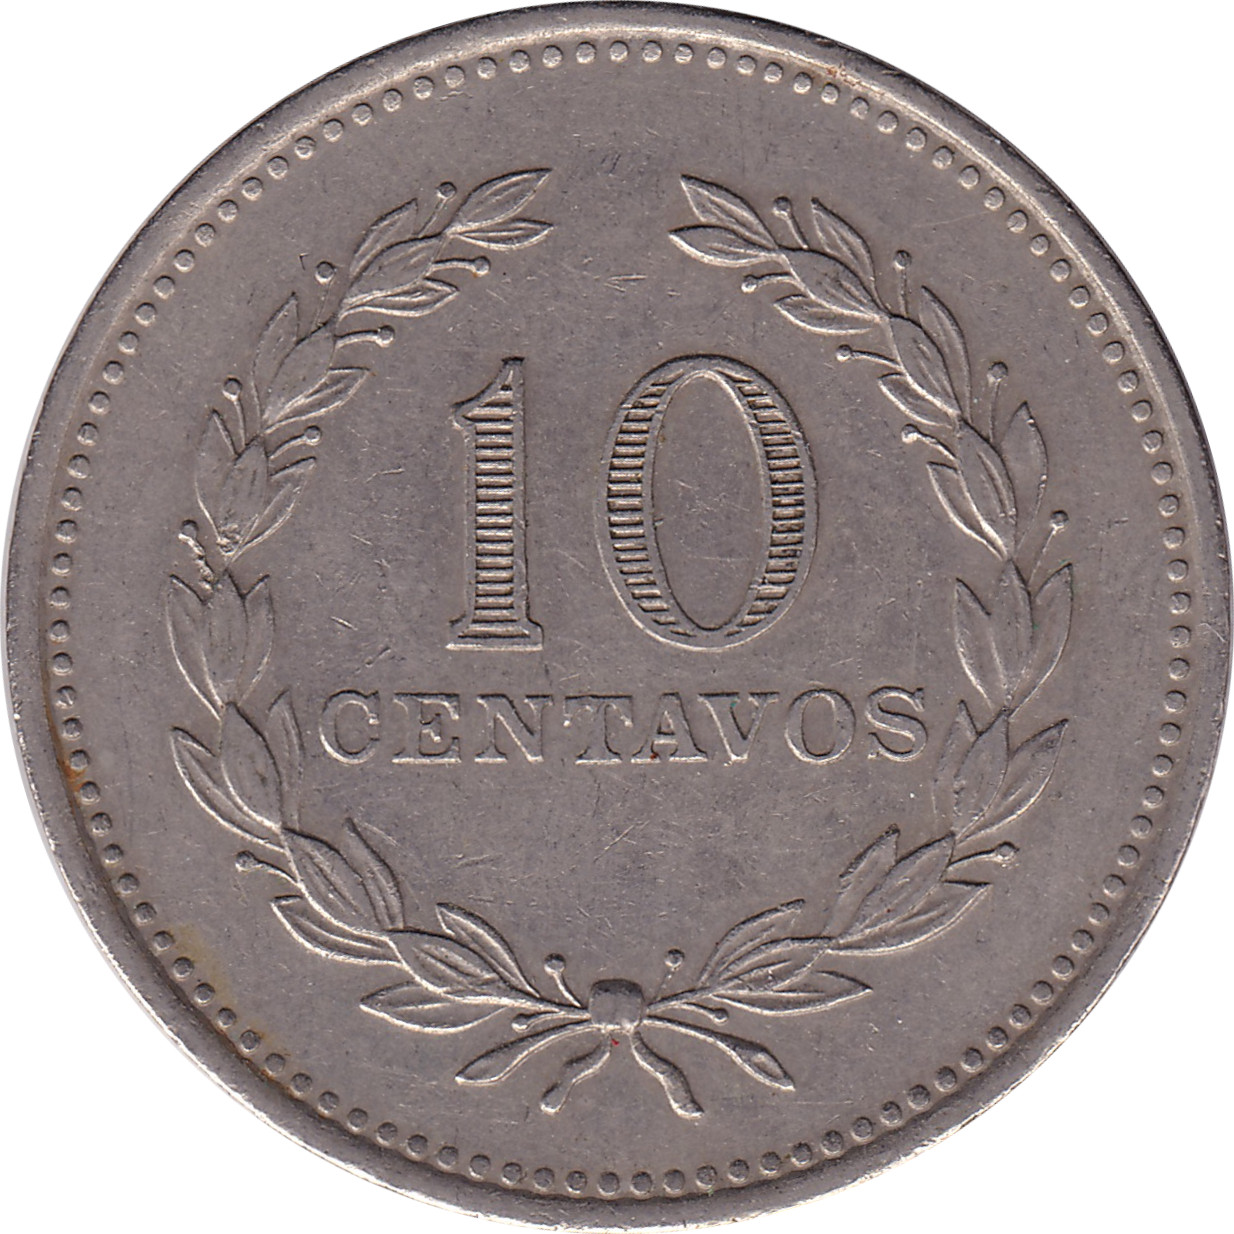 10 centavos - Francisco Morazan - Type 2